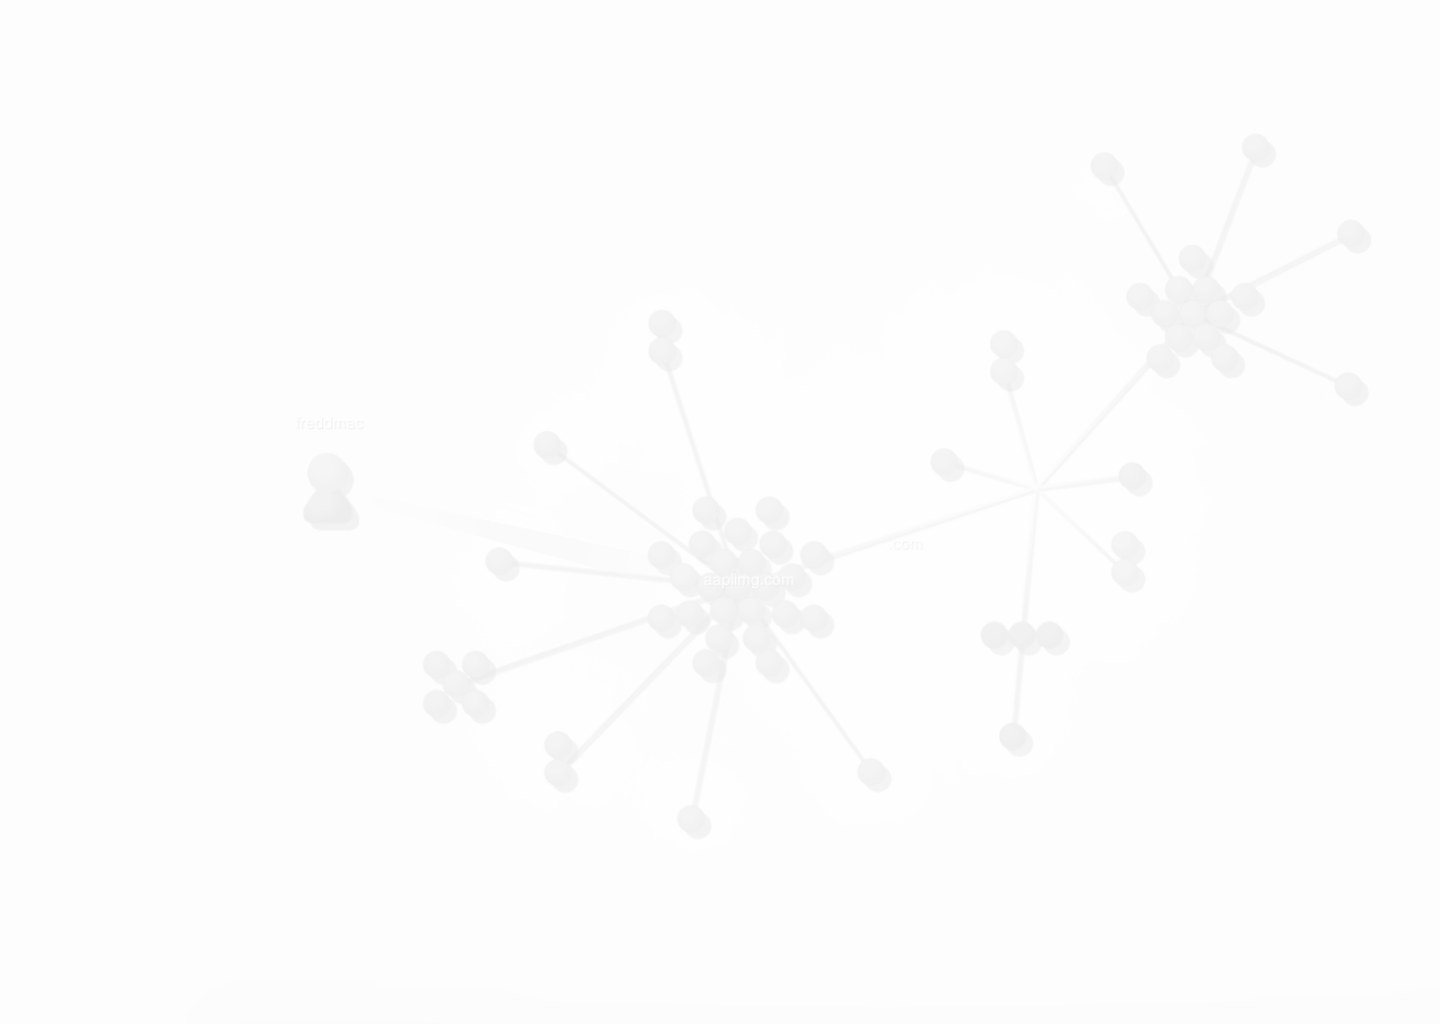 Dowse network visualization